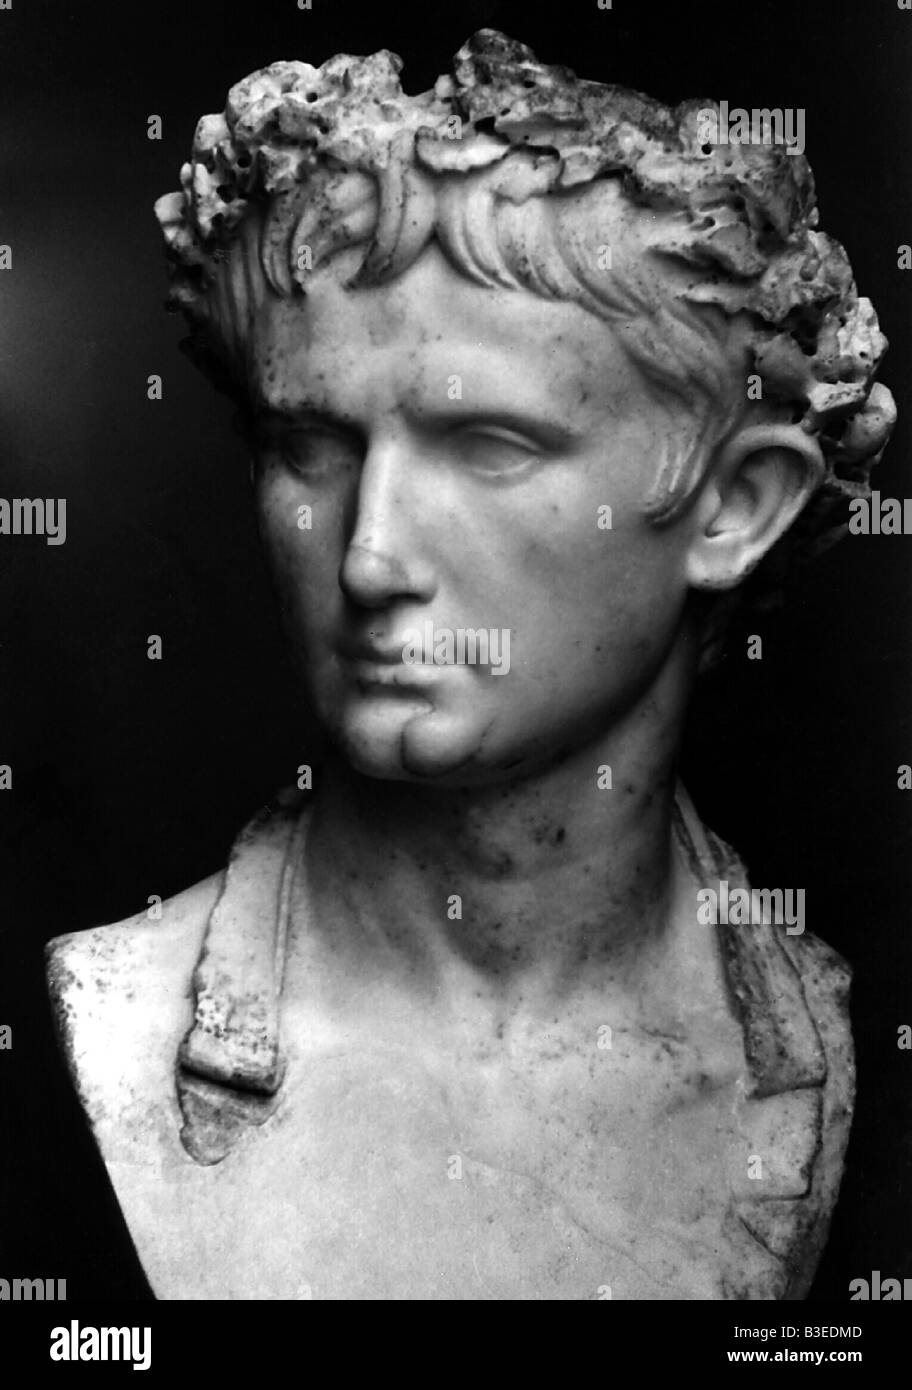 Augustus (Imperator Caesar Augustus), 23.9.63 v. Chr. - 19.8.14 n. Chr., römischer Kaiser 13.1.27 v. Chr. - 19.8.14 n. Chr., Porträt, Büste, Marmor, ca. 20 v. Chr., Glyptothek München, Corona civica oder Corona triumphalis, Stockfoto